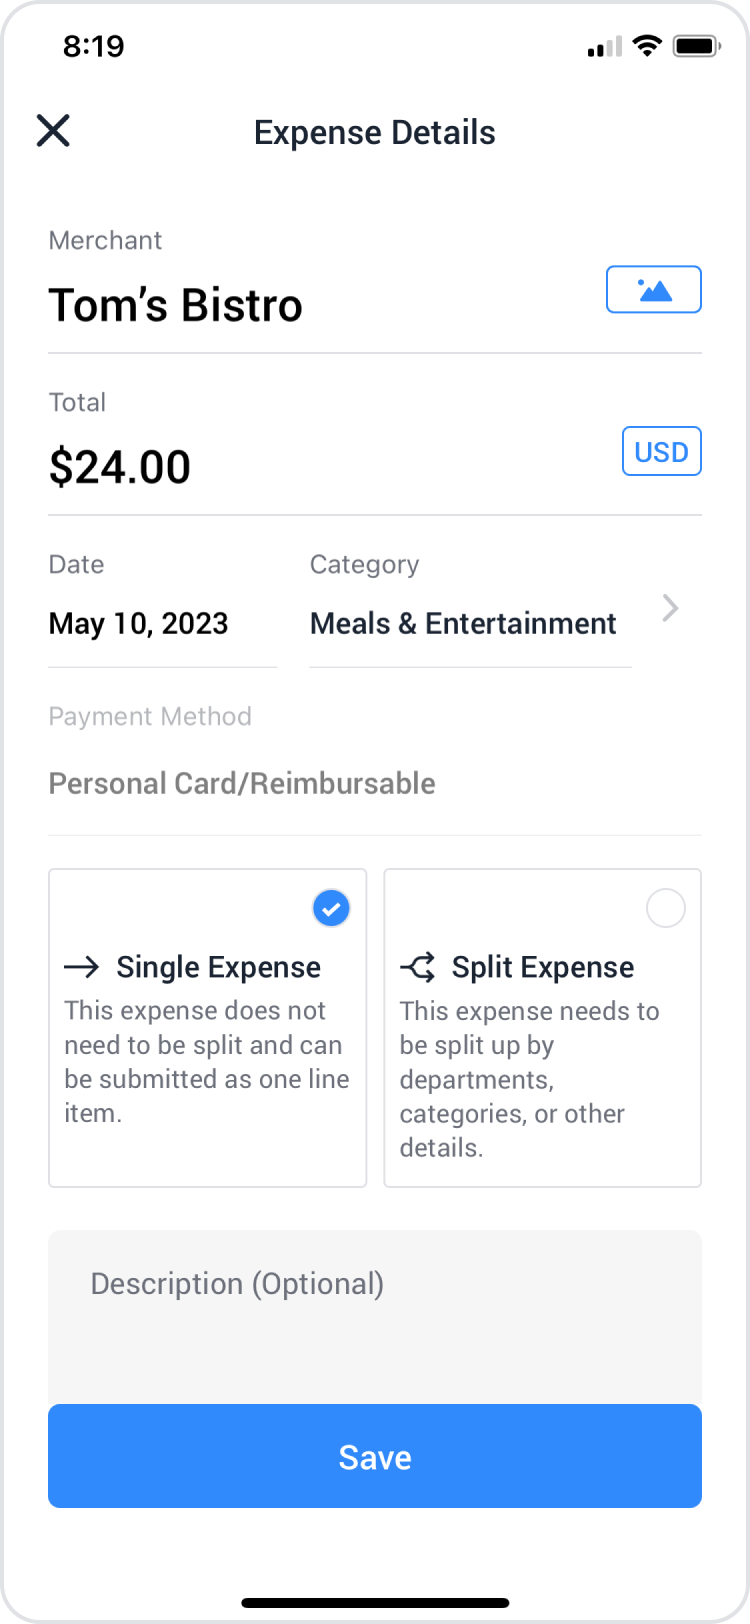 Expense details